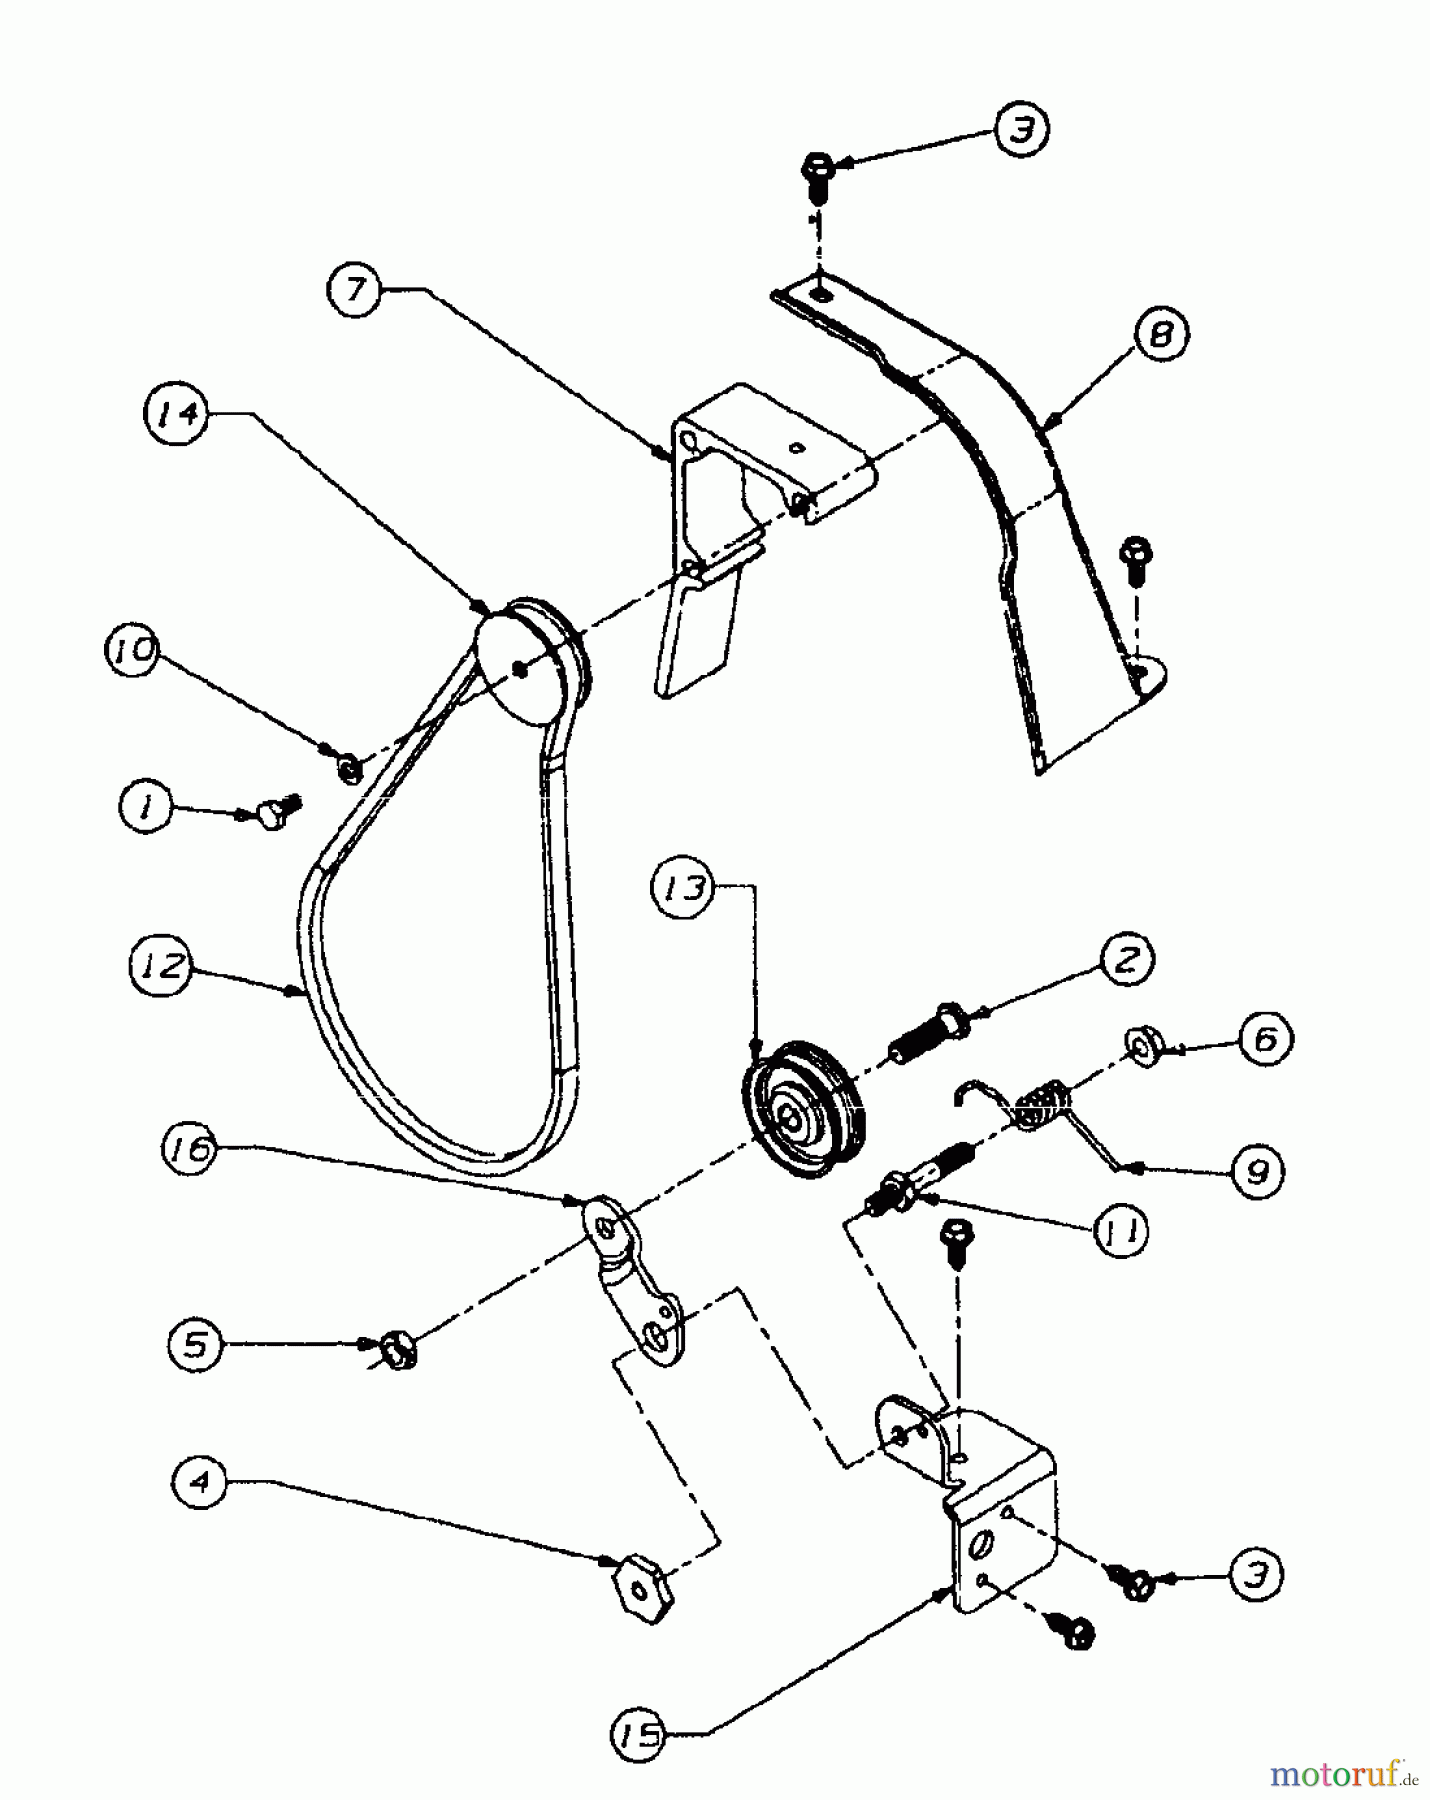  Gutbrod Chipper shredders vac LSH 66-80 04201.04  (1996) Belts, Tension pulley